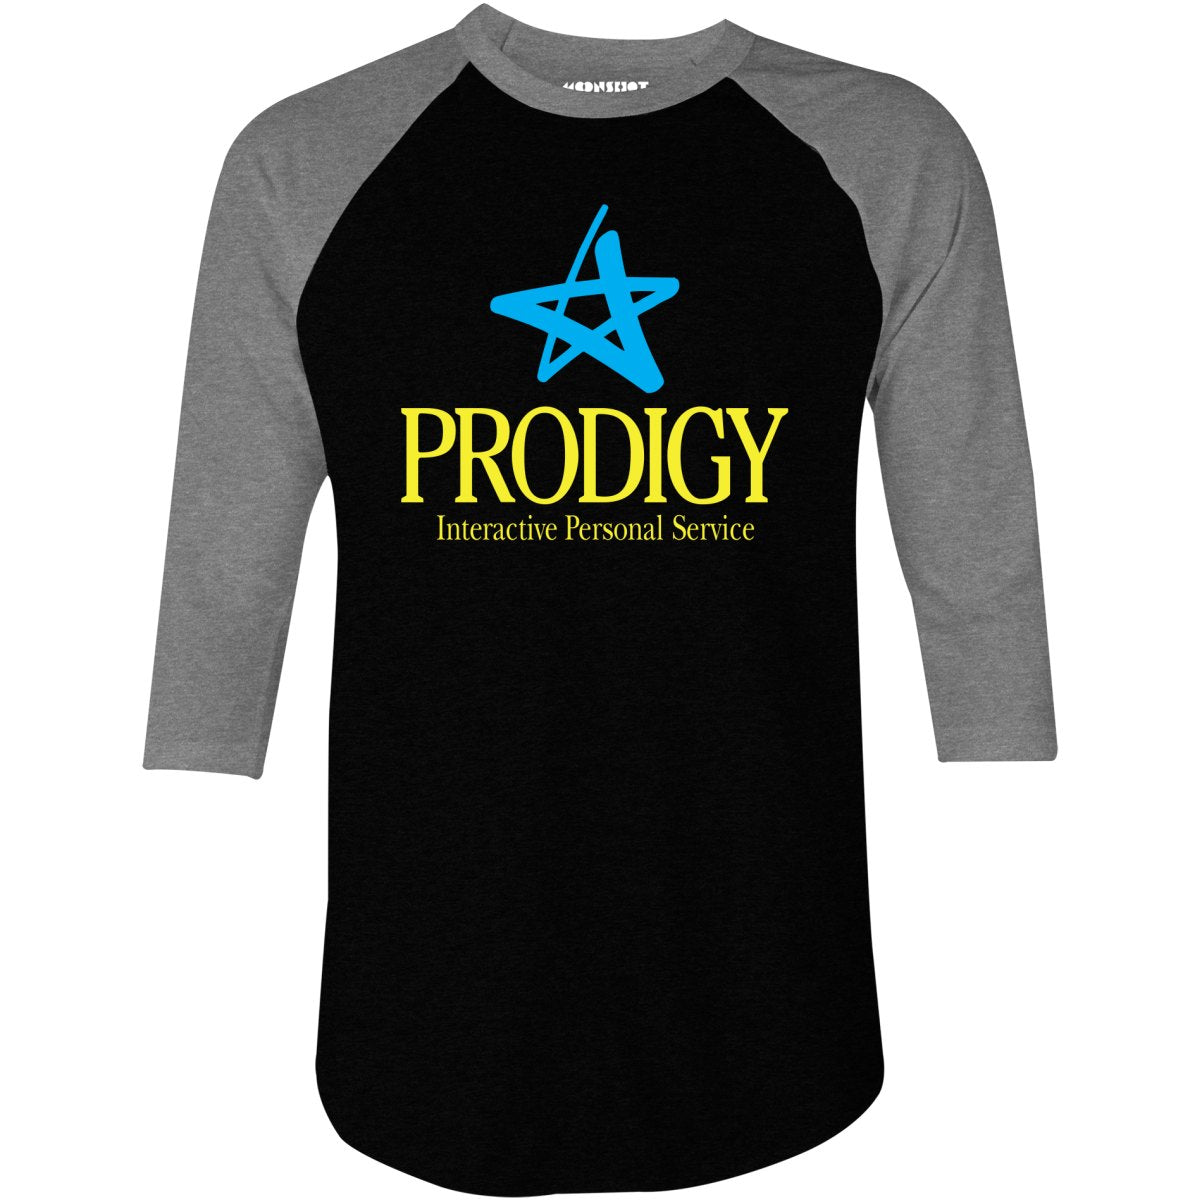 Prodigy - Vintage Internet - 3/4 Sleeve Raglan T-Shirt